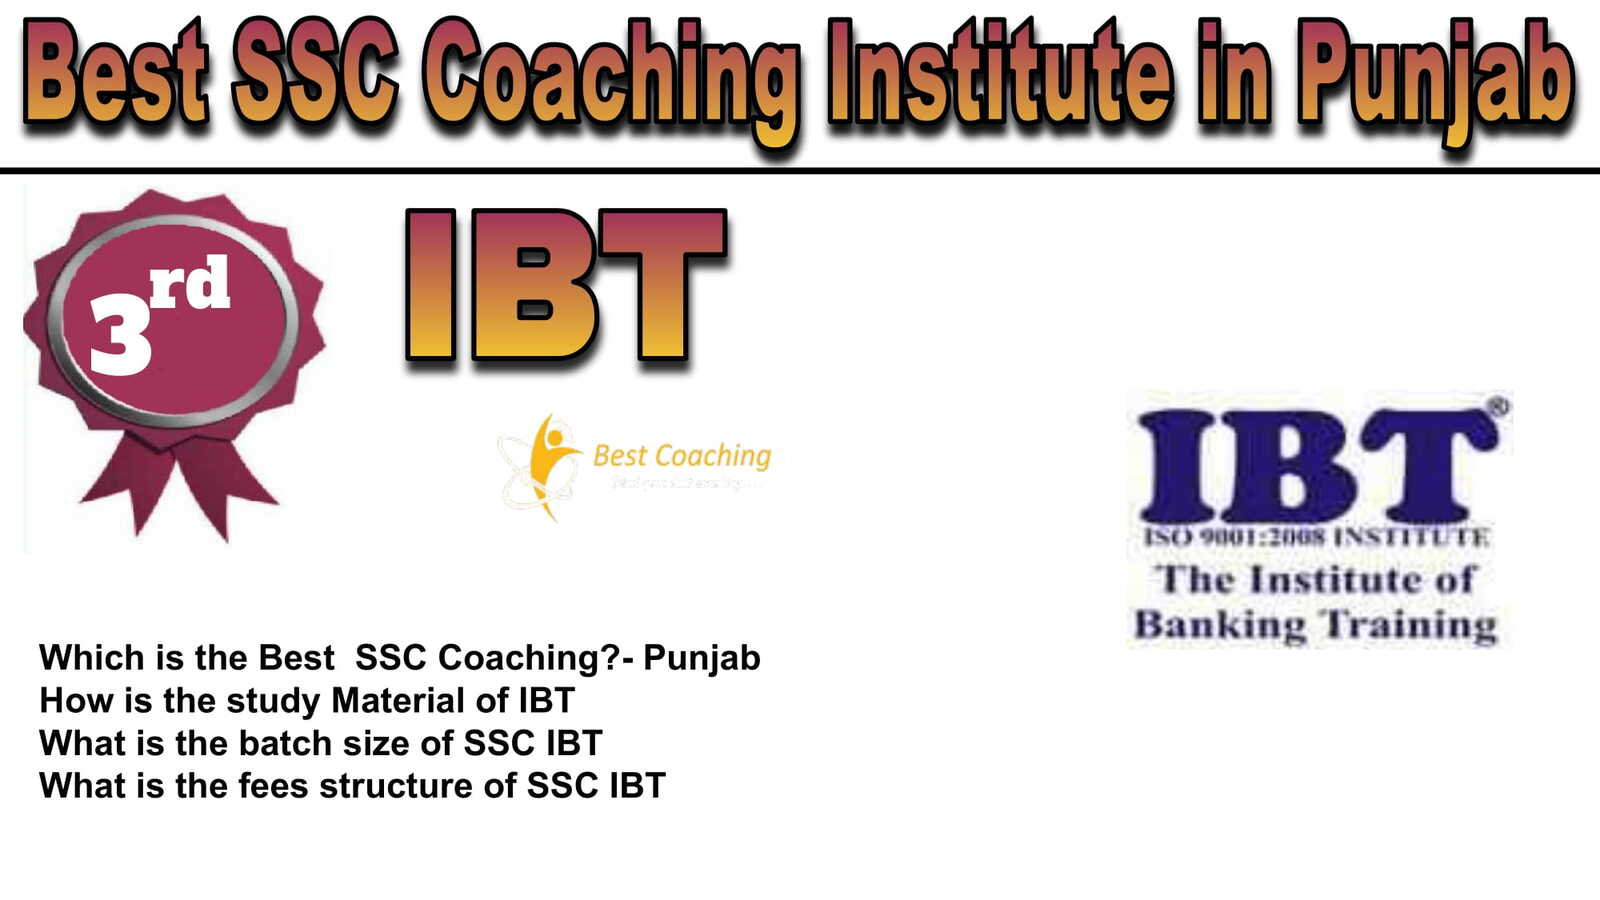 Rank 3 Best SSC Coaching in Punjab